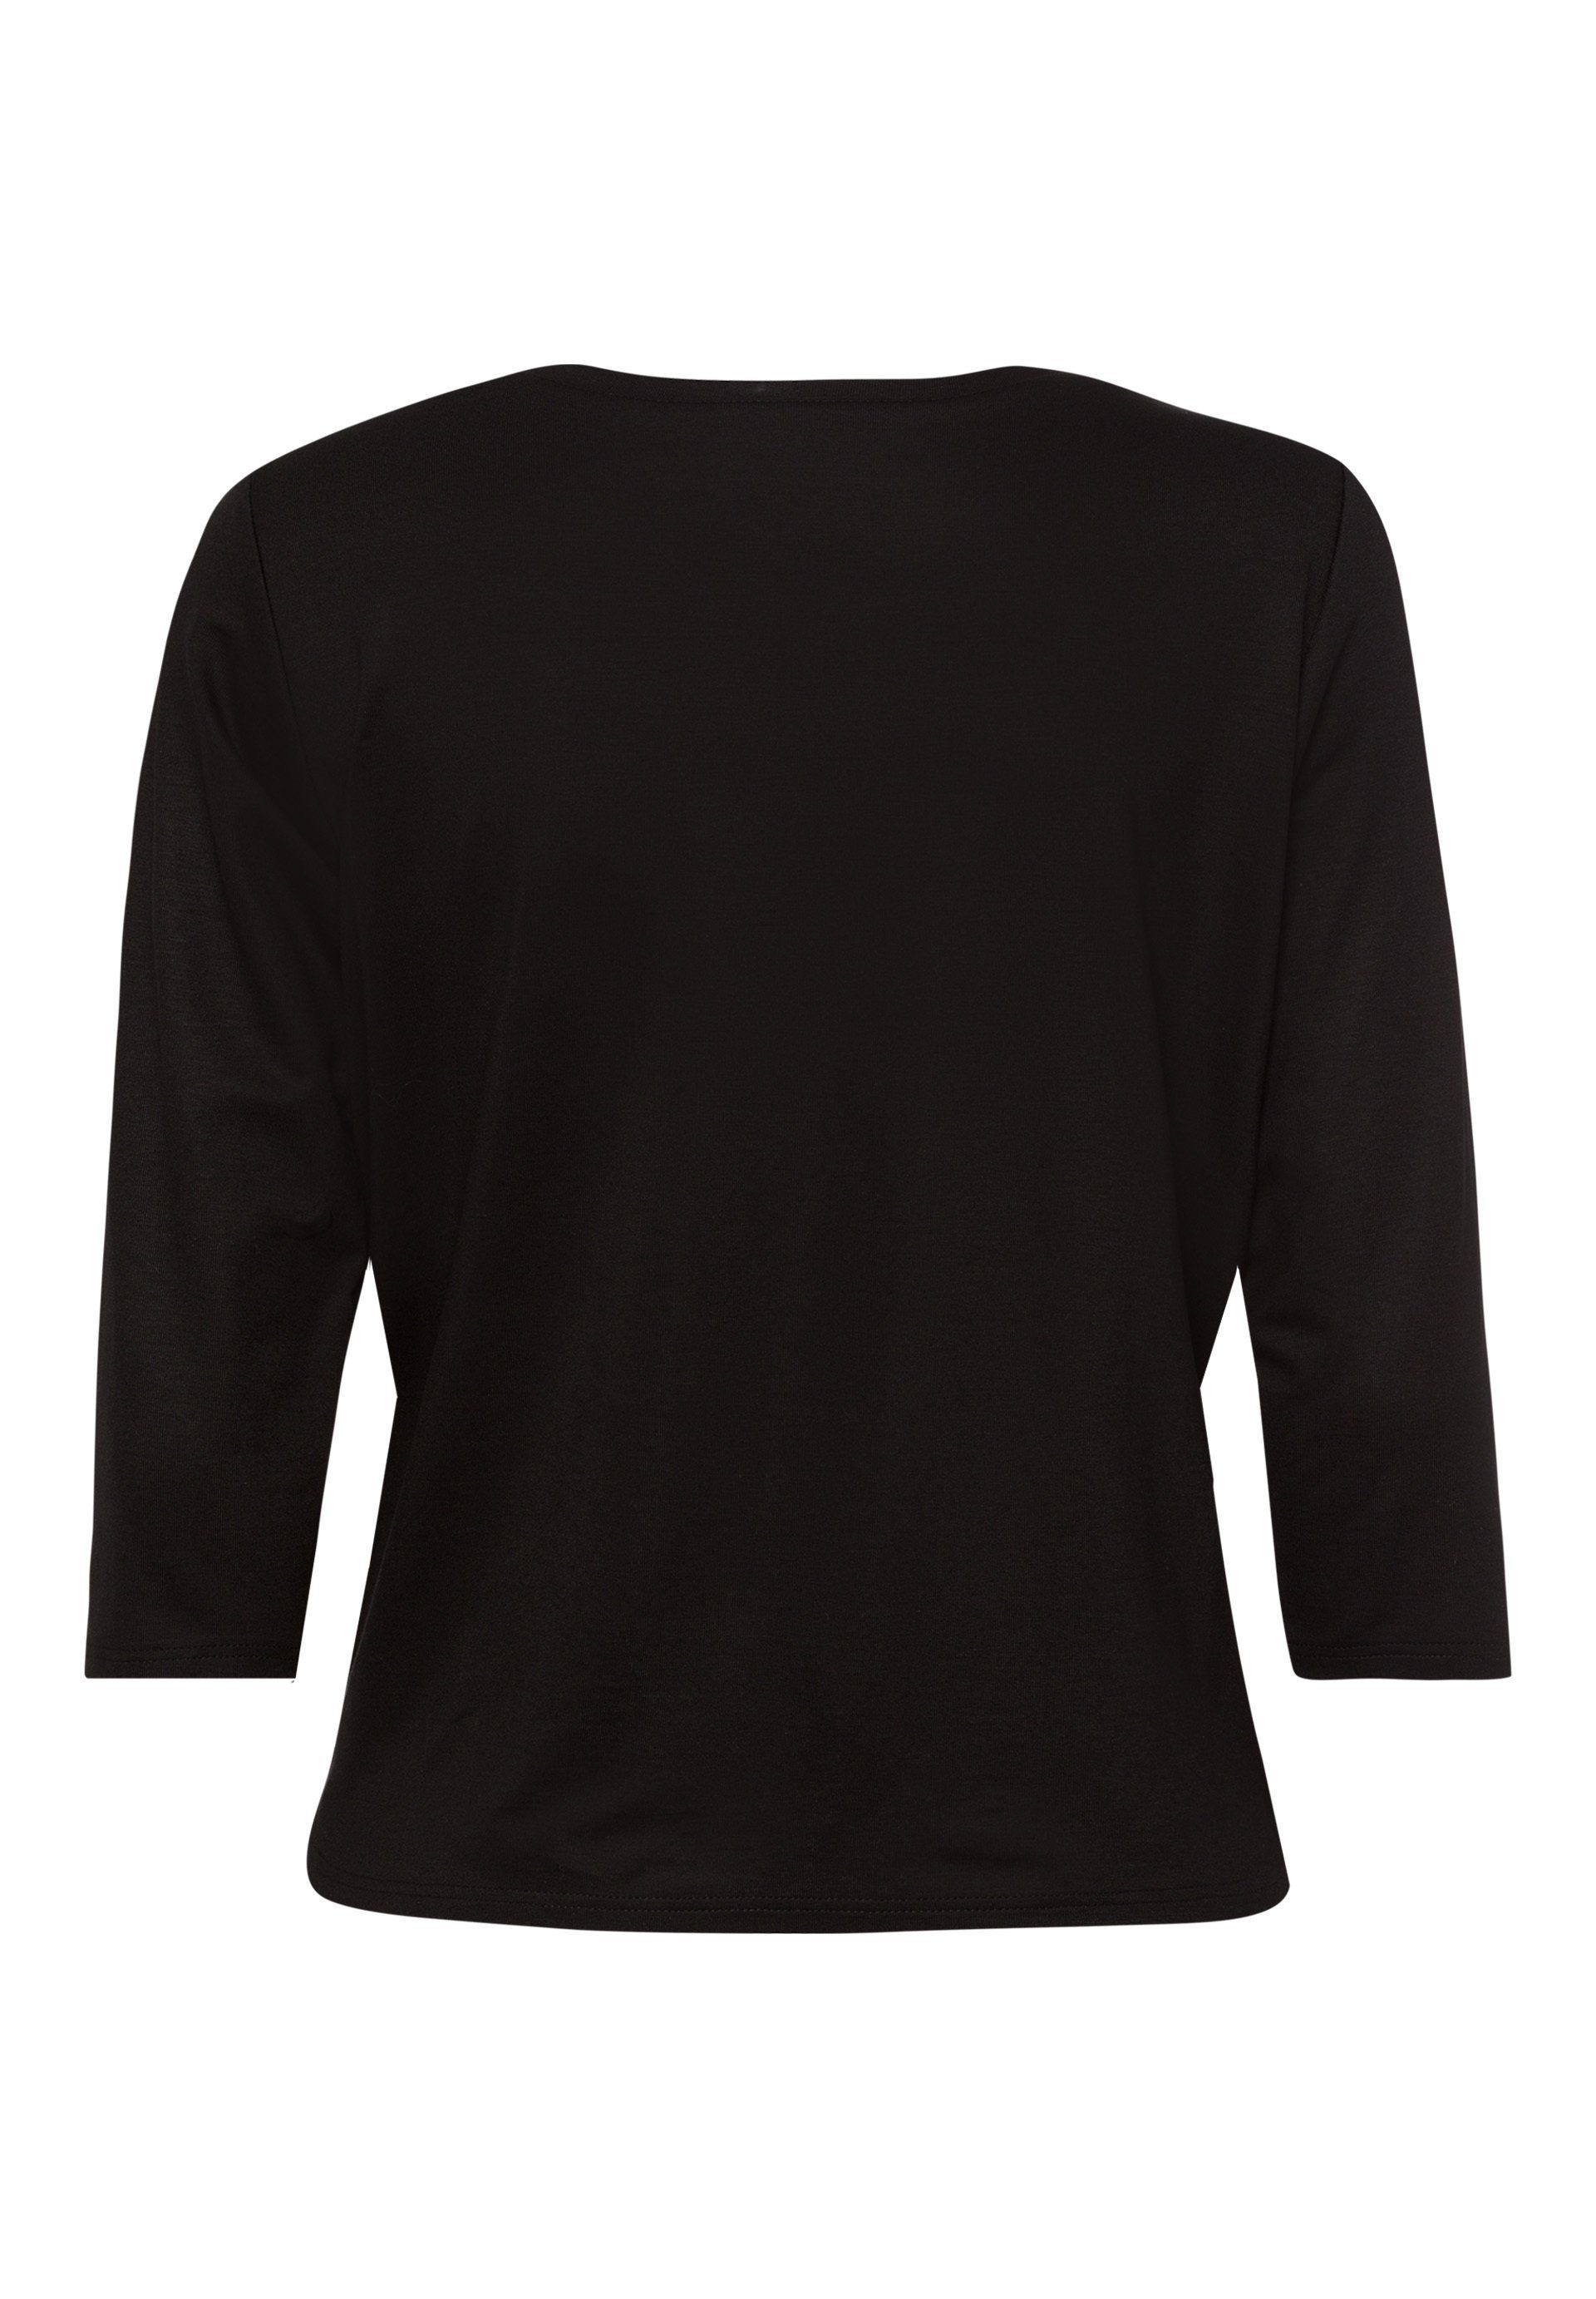 FRANK WALDER 3/4-Arm-Shirt ELEMENTS schwarz Shirt